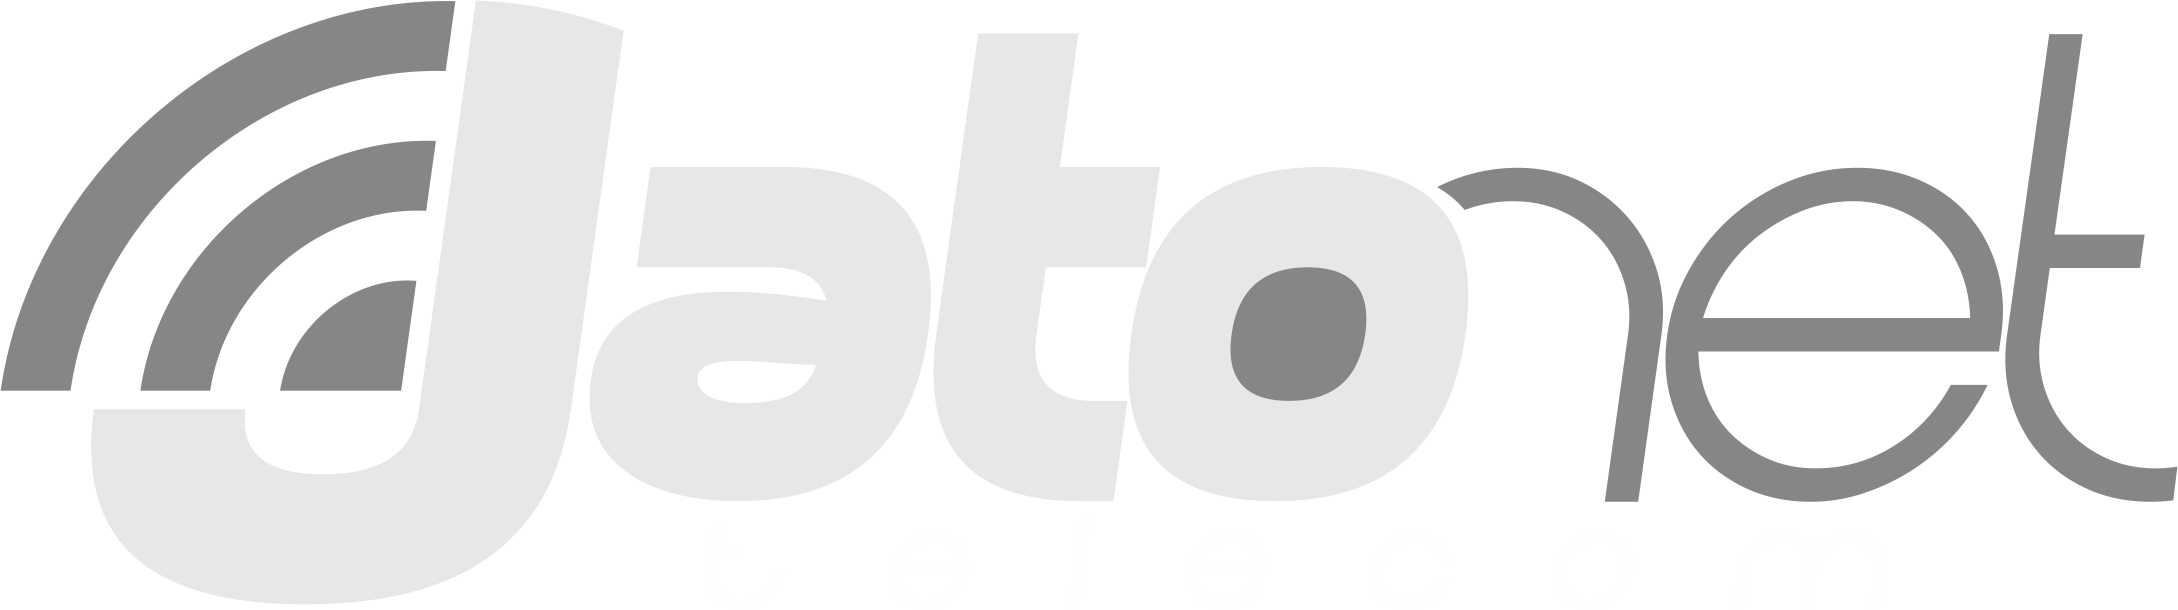 logo-jato-telecom-cinza